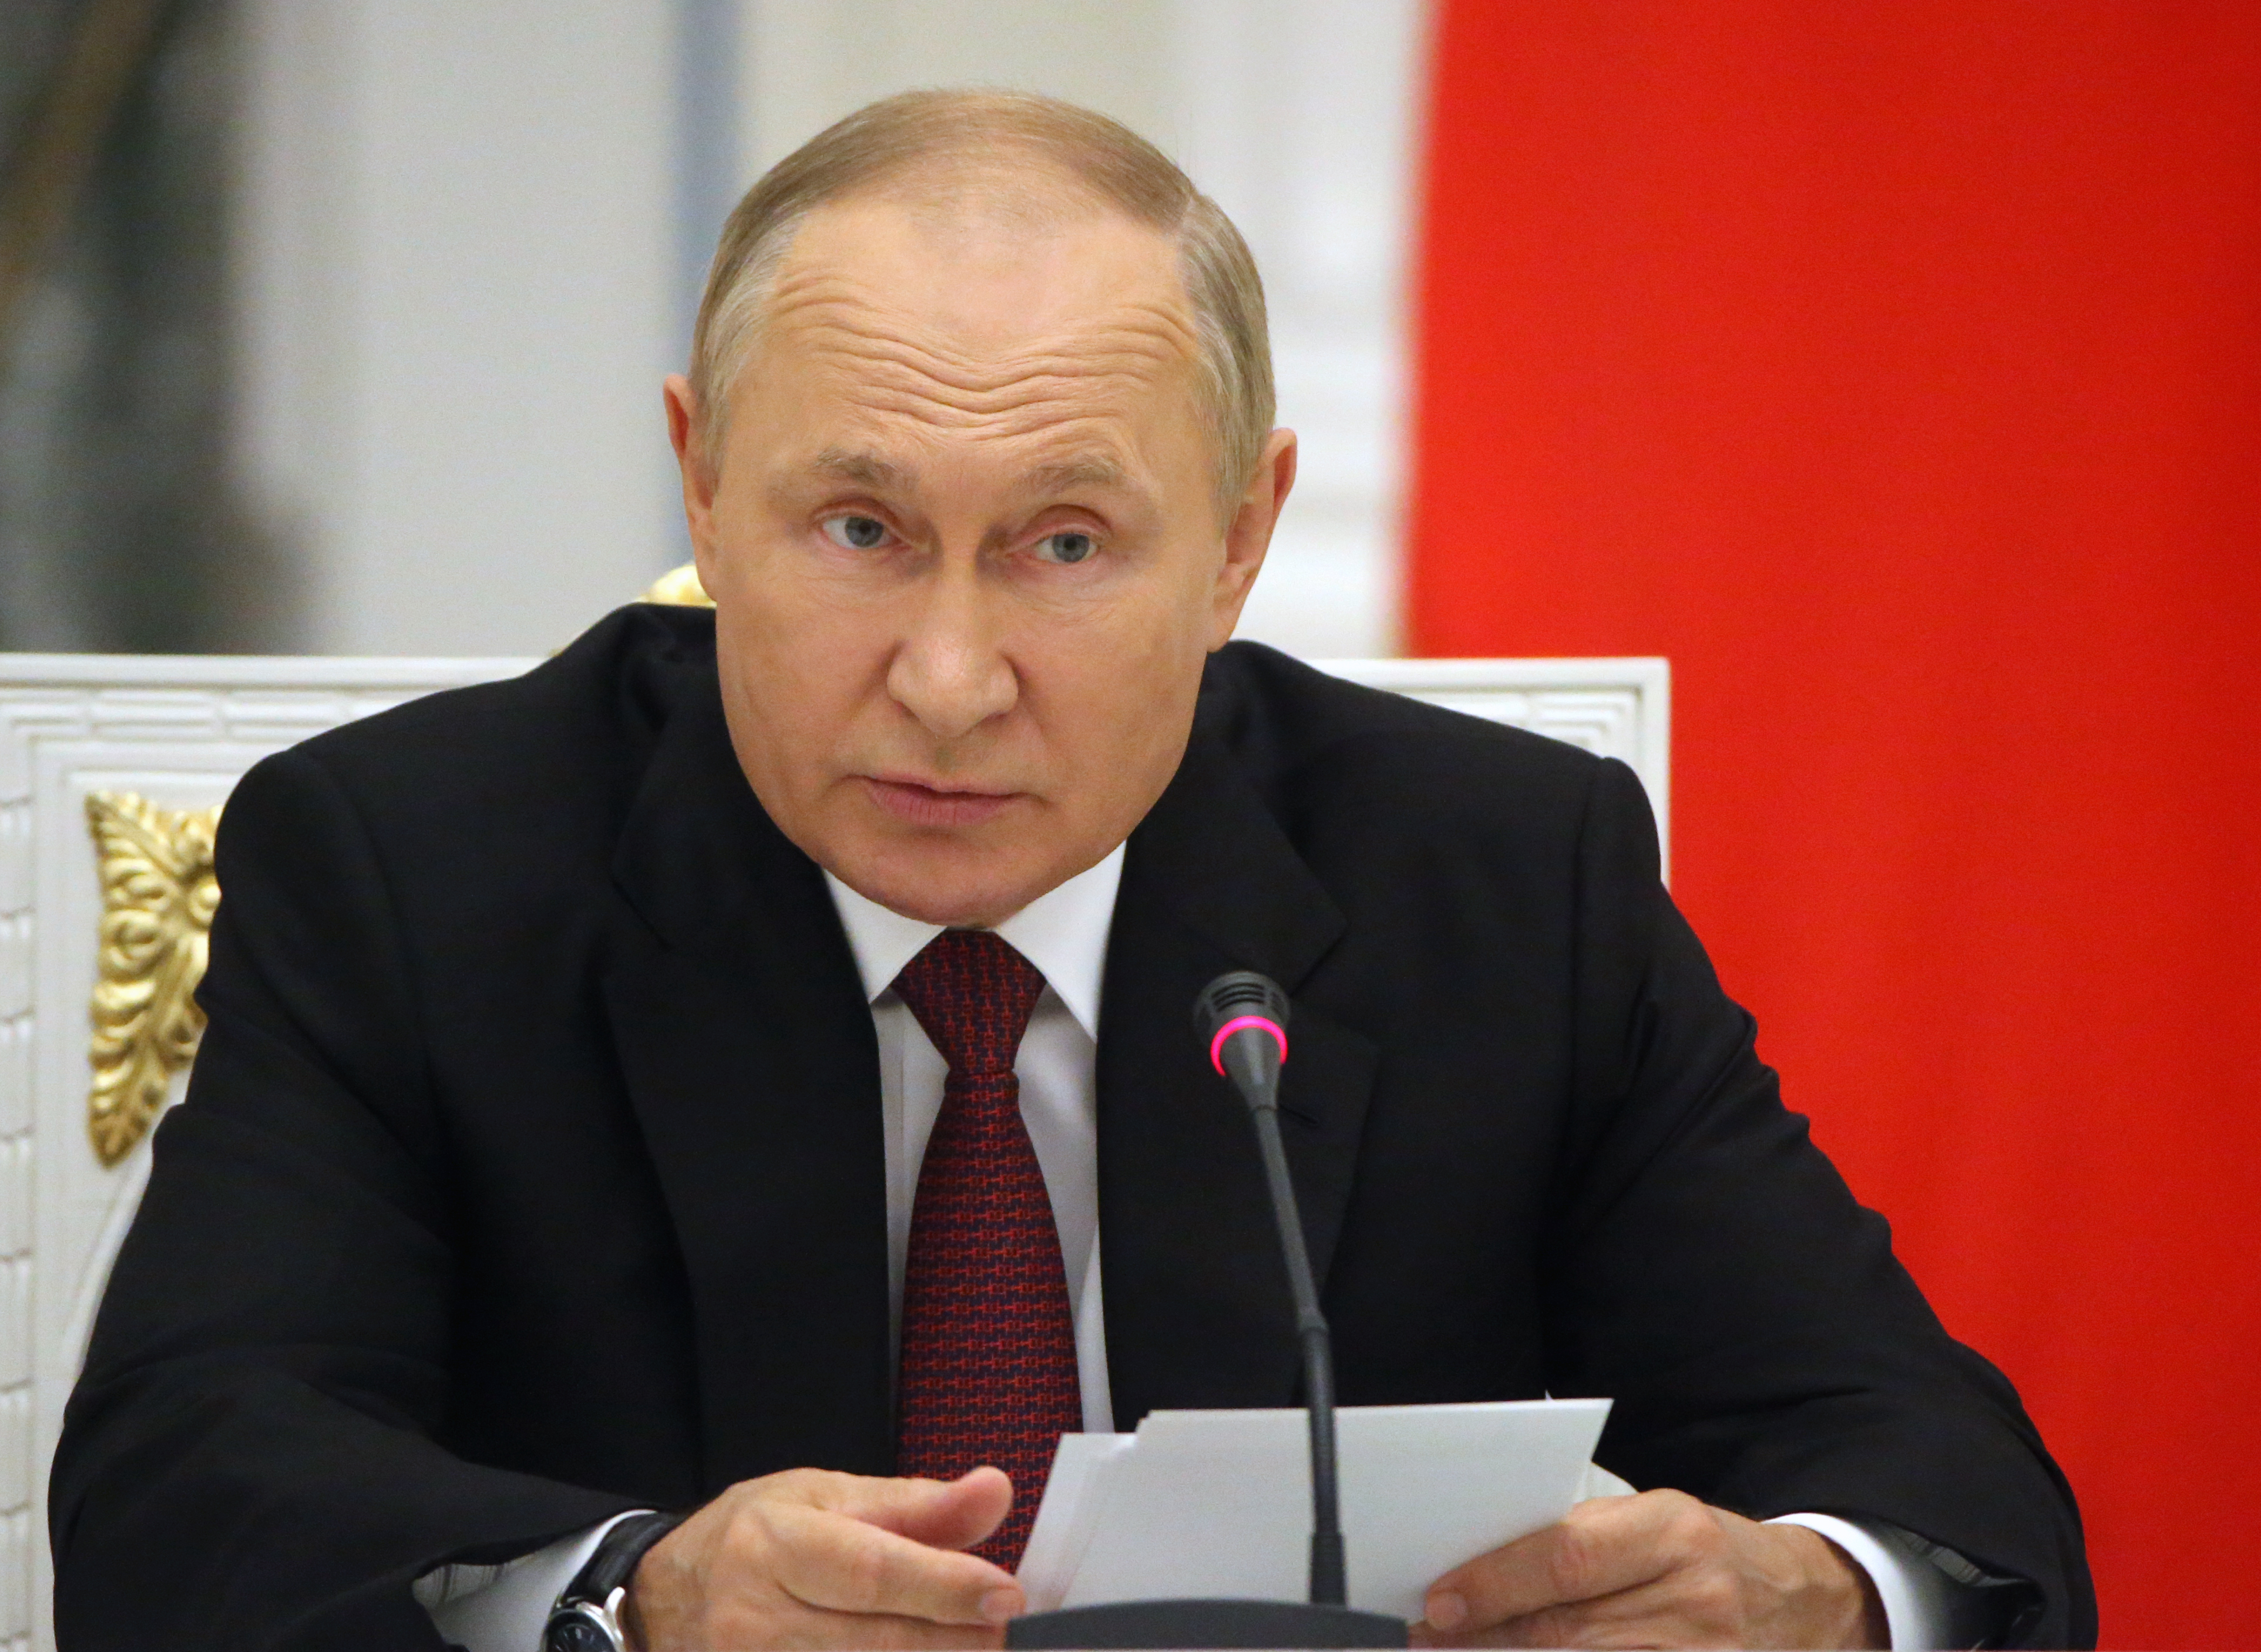 Putin in 'Life-and-Death' Struggle in Ukraine, China Warns